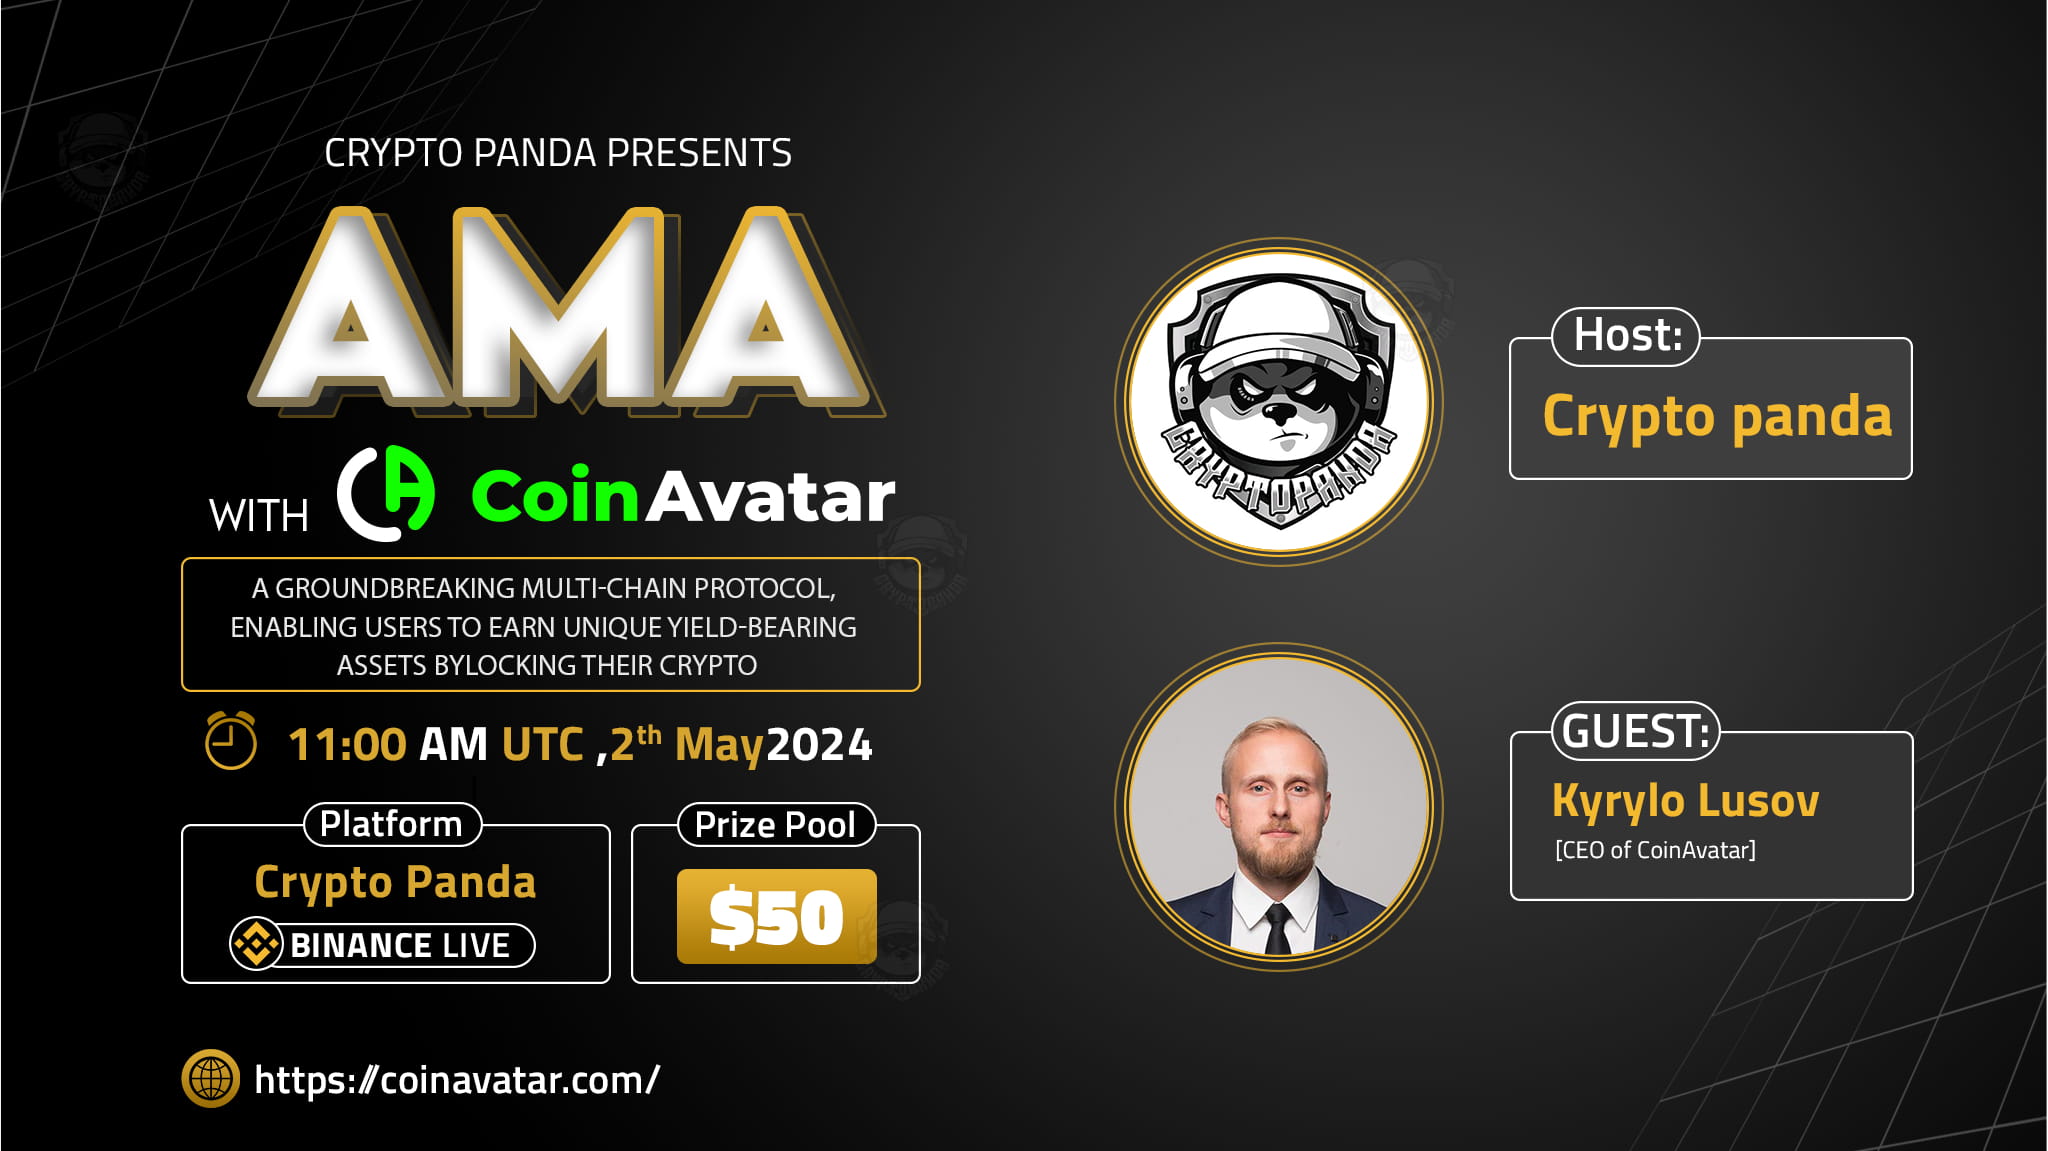 Crypto Panda presents AMA with CoinAvatar